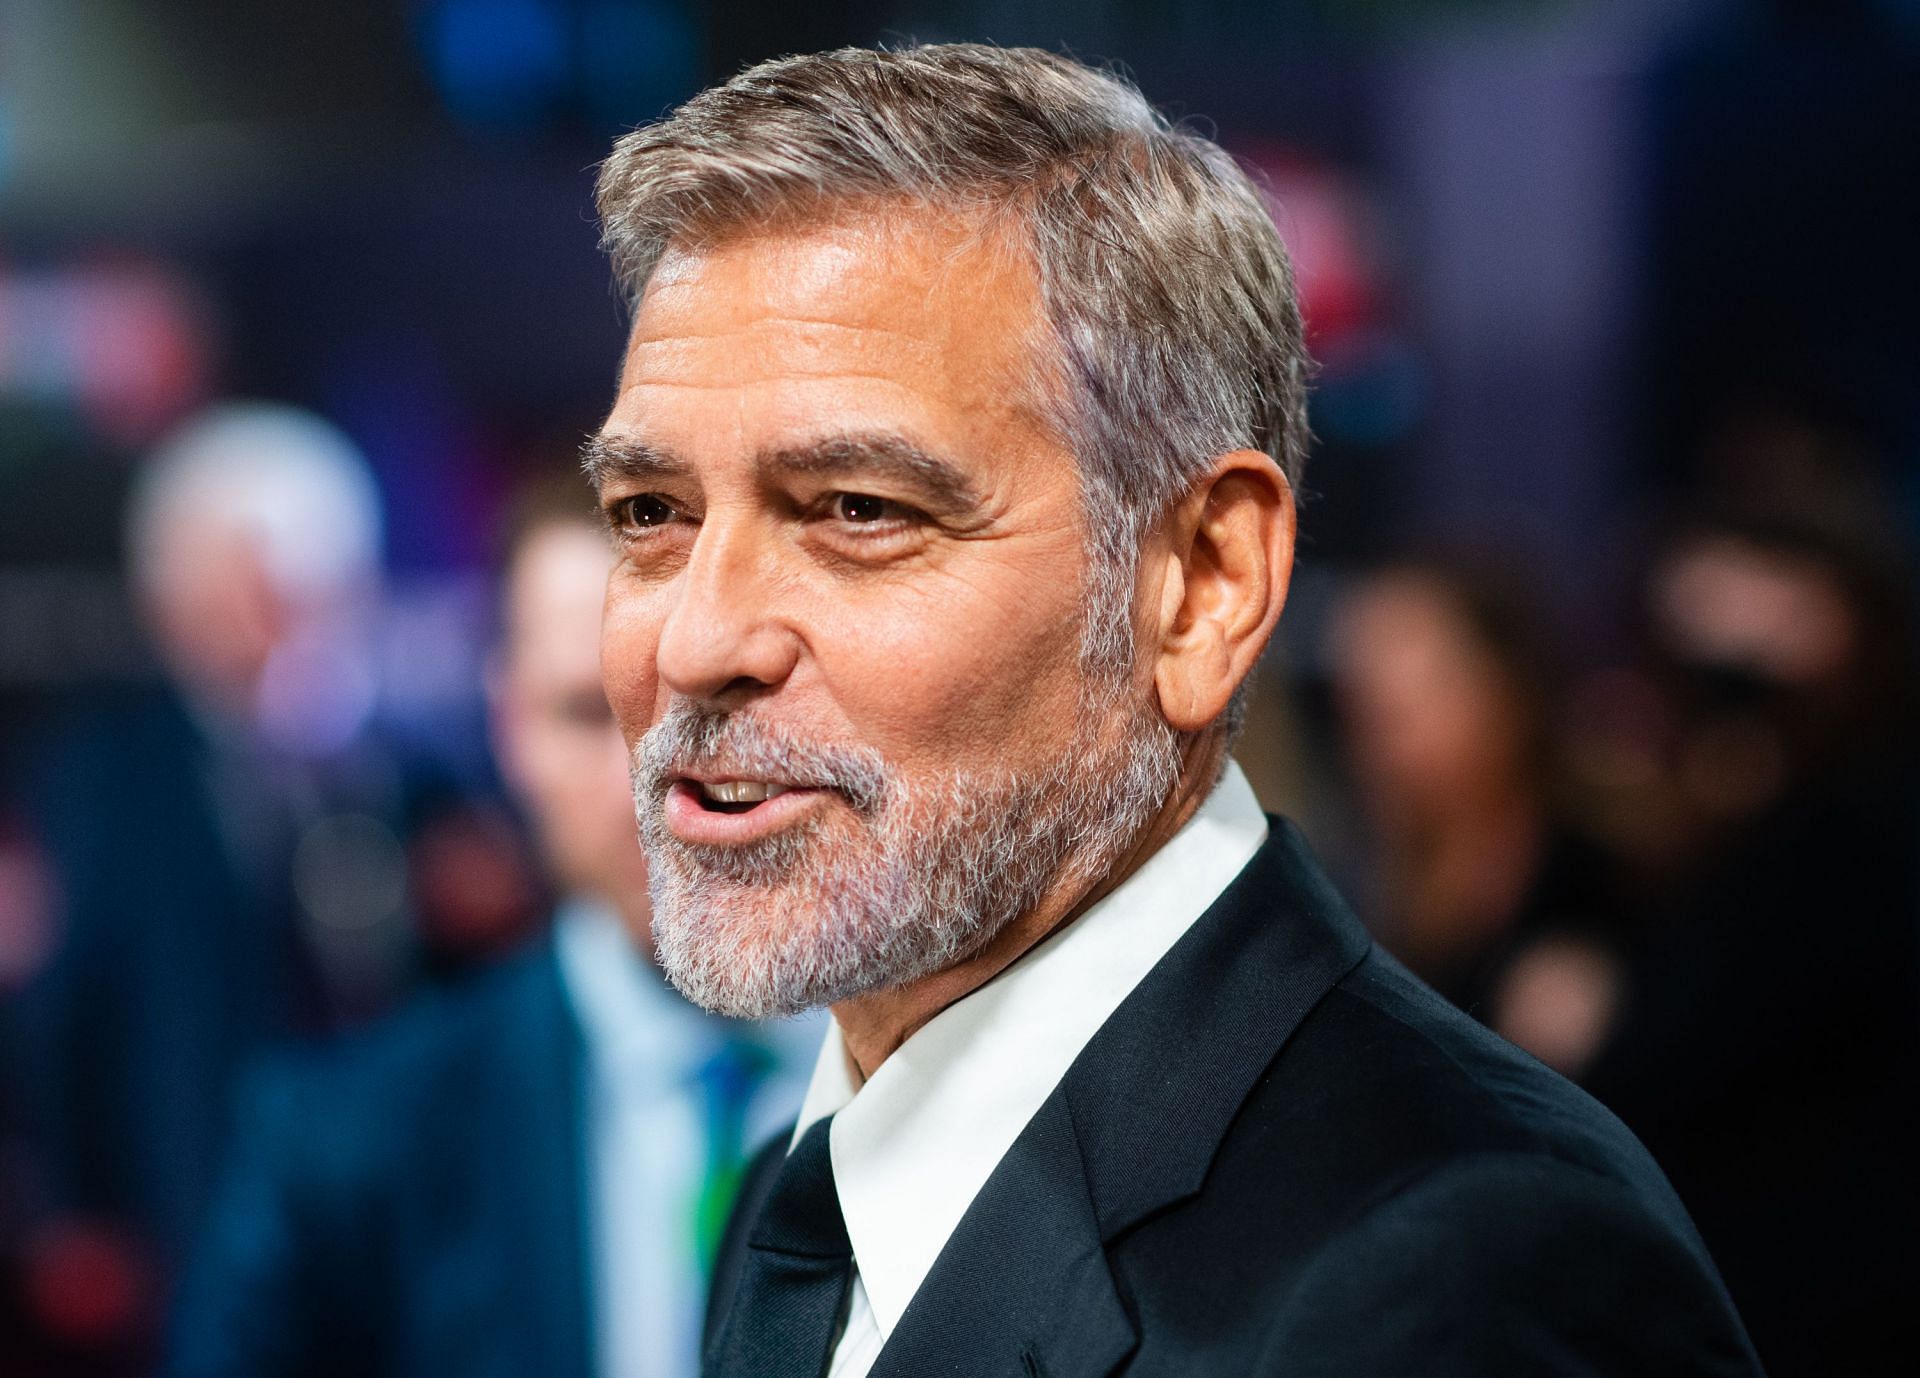 George Clooney (Image via Samir Hussein/ Getty Images)